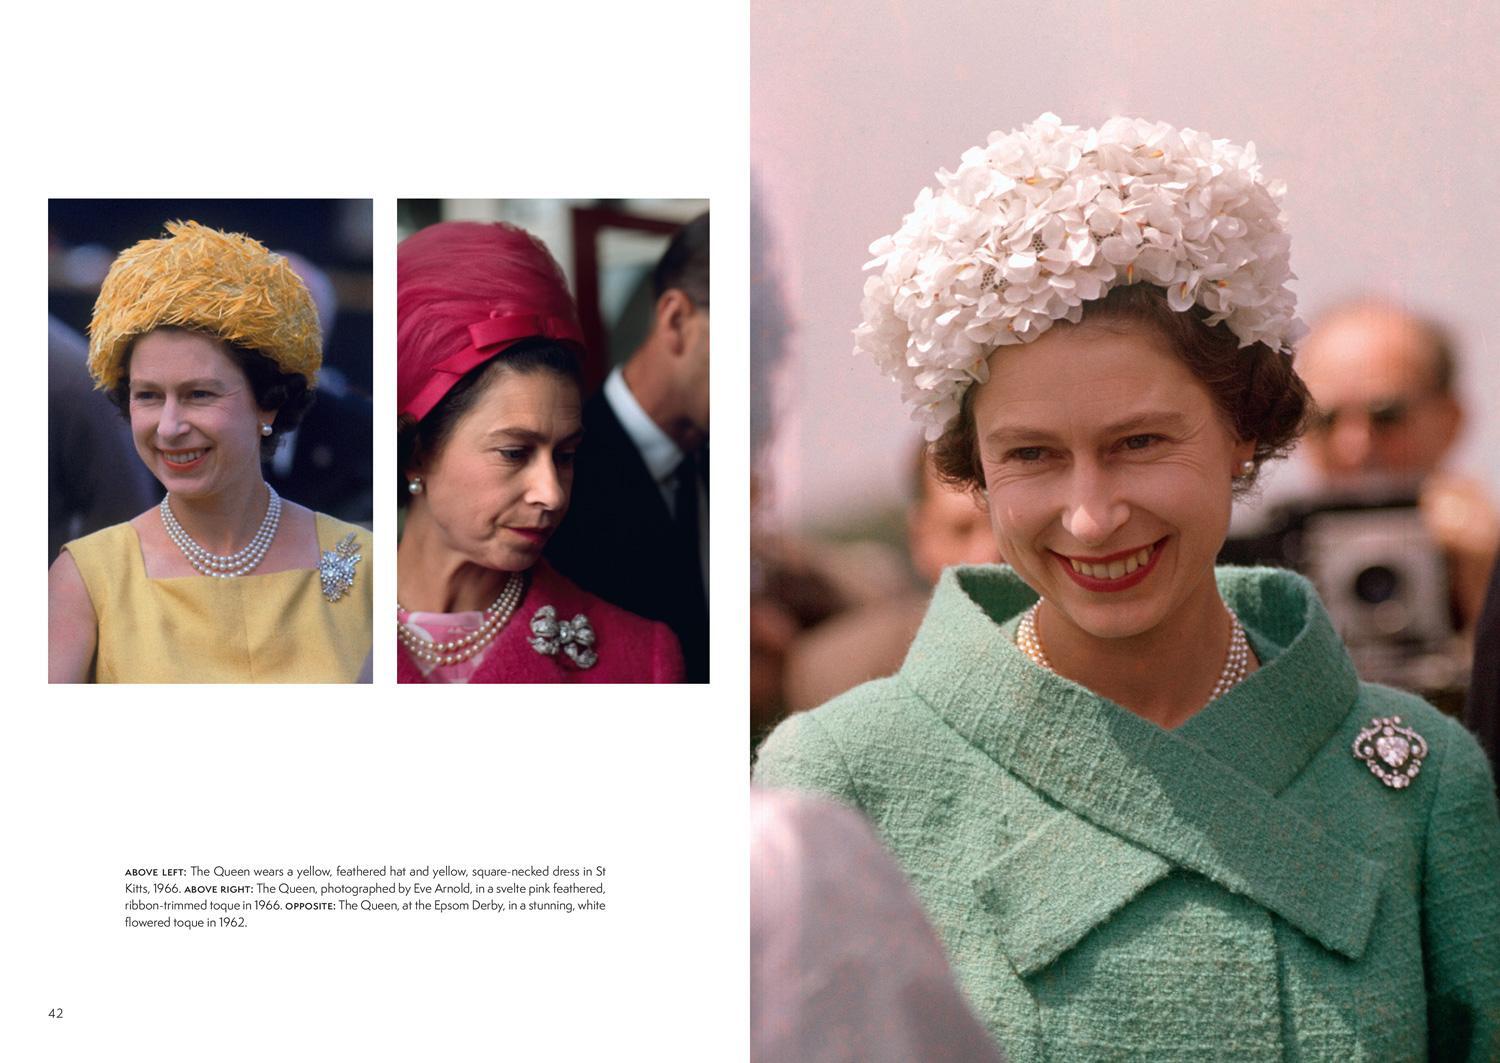 Bild: 9781911682547 | Queen Elizabeth II | A Lifetime Dressing for the World Stage | Eastoe